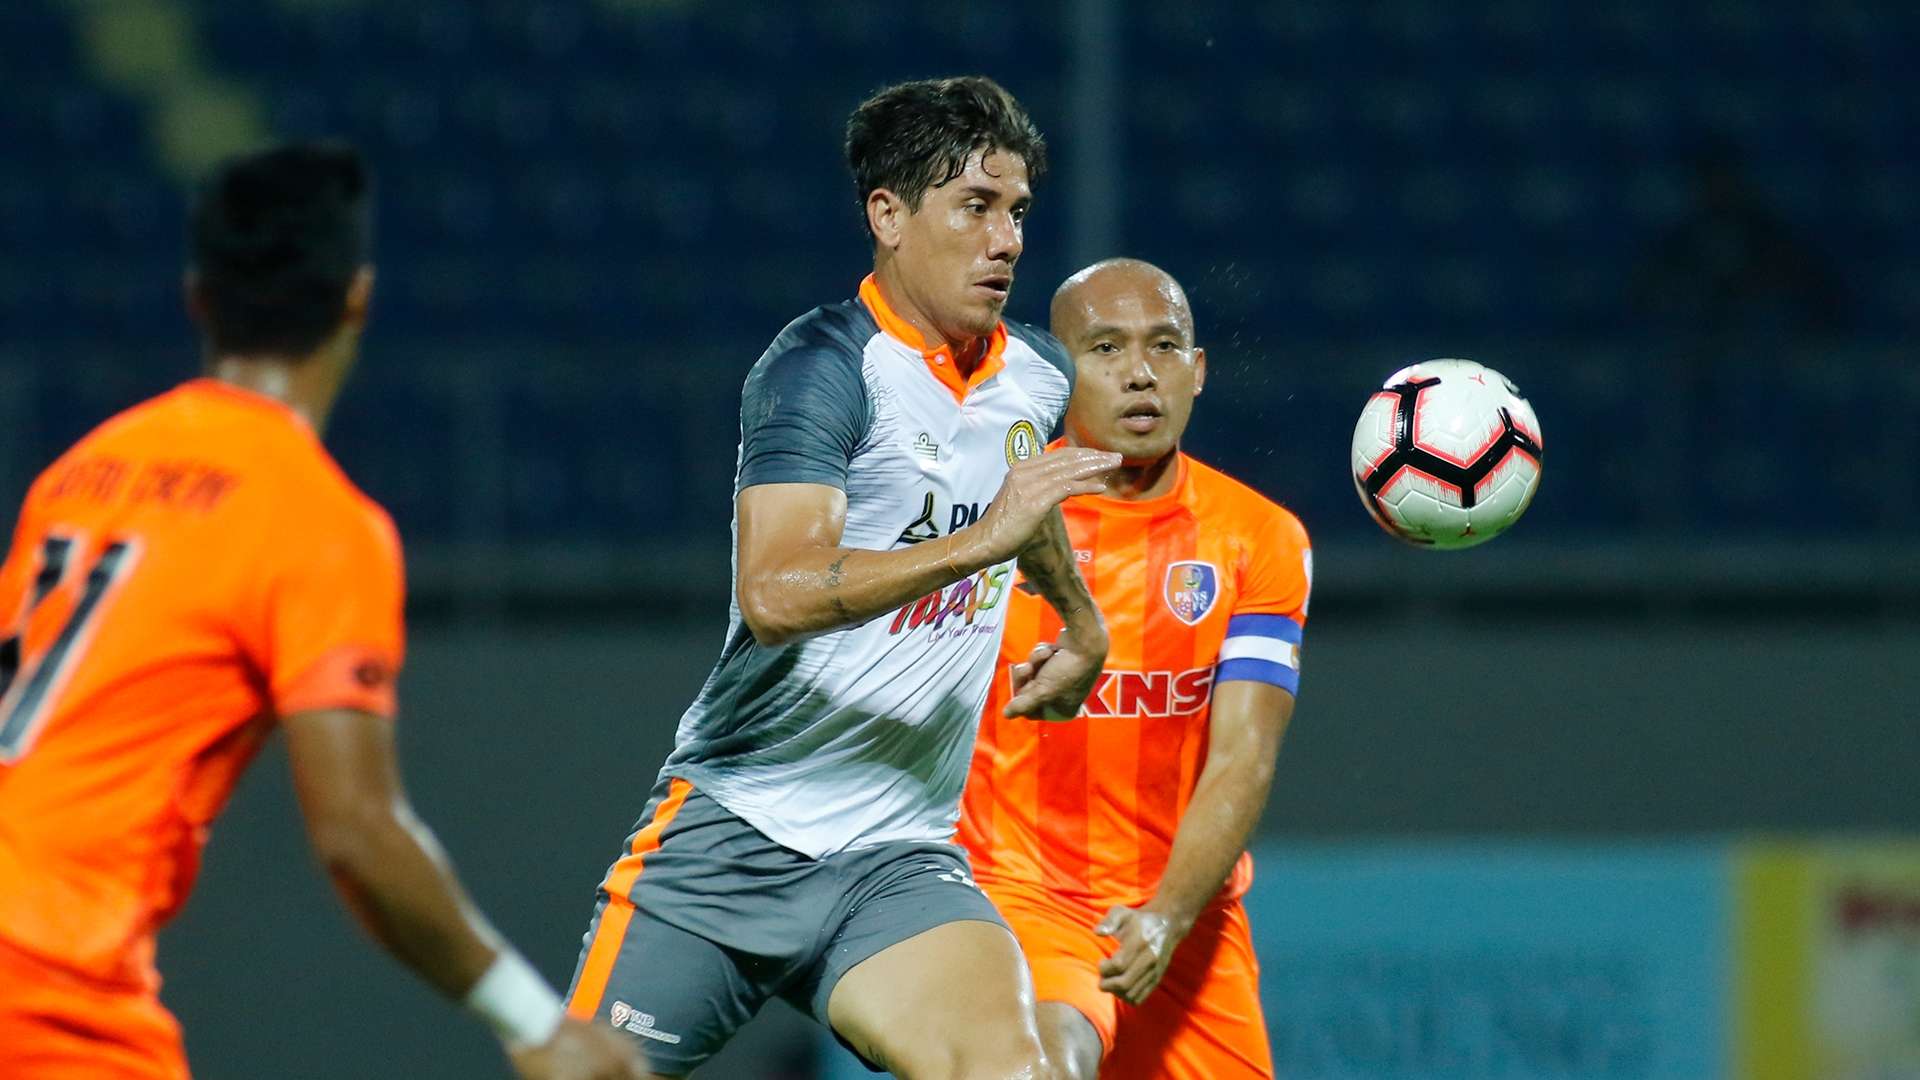 Giancarlo Rodrigues, PKNP FC v PKNS FC, Malaysia Super League, 25 Jun 2019